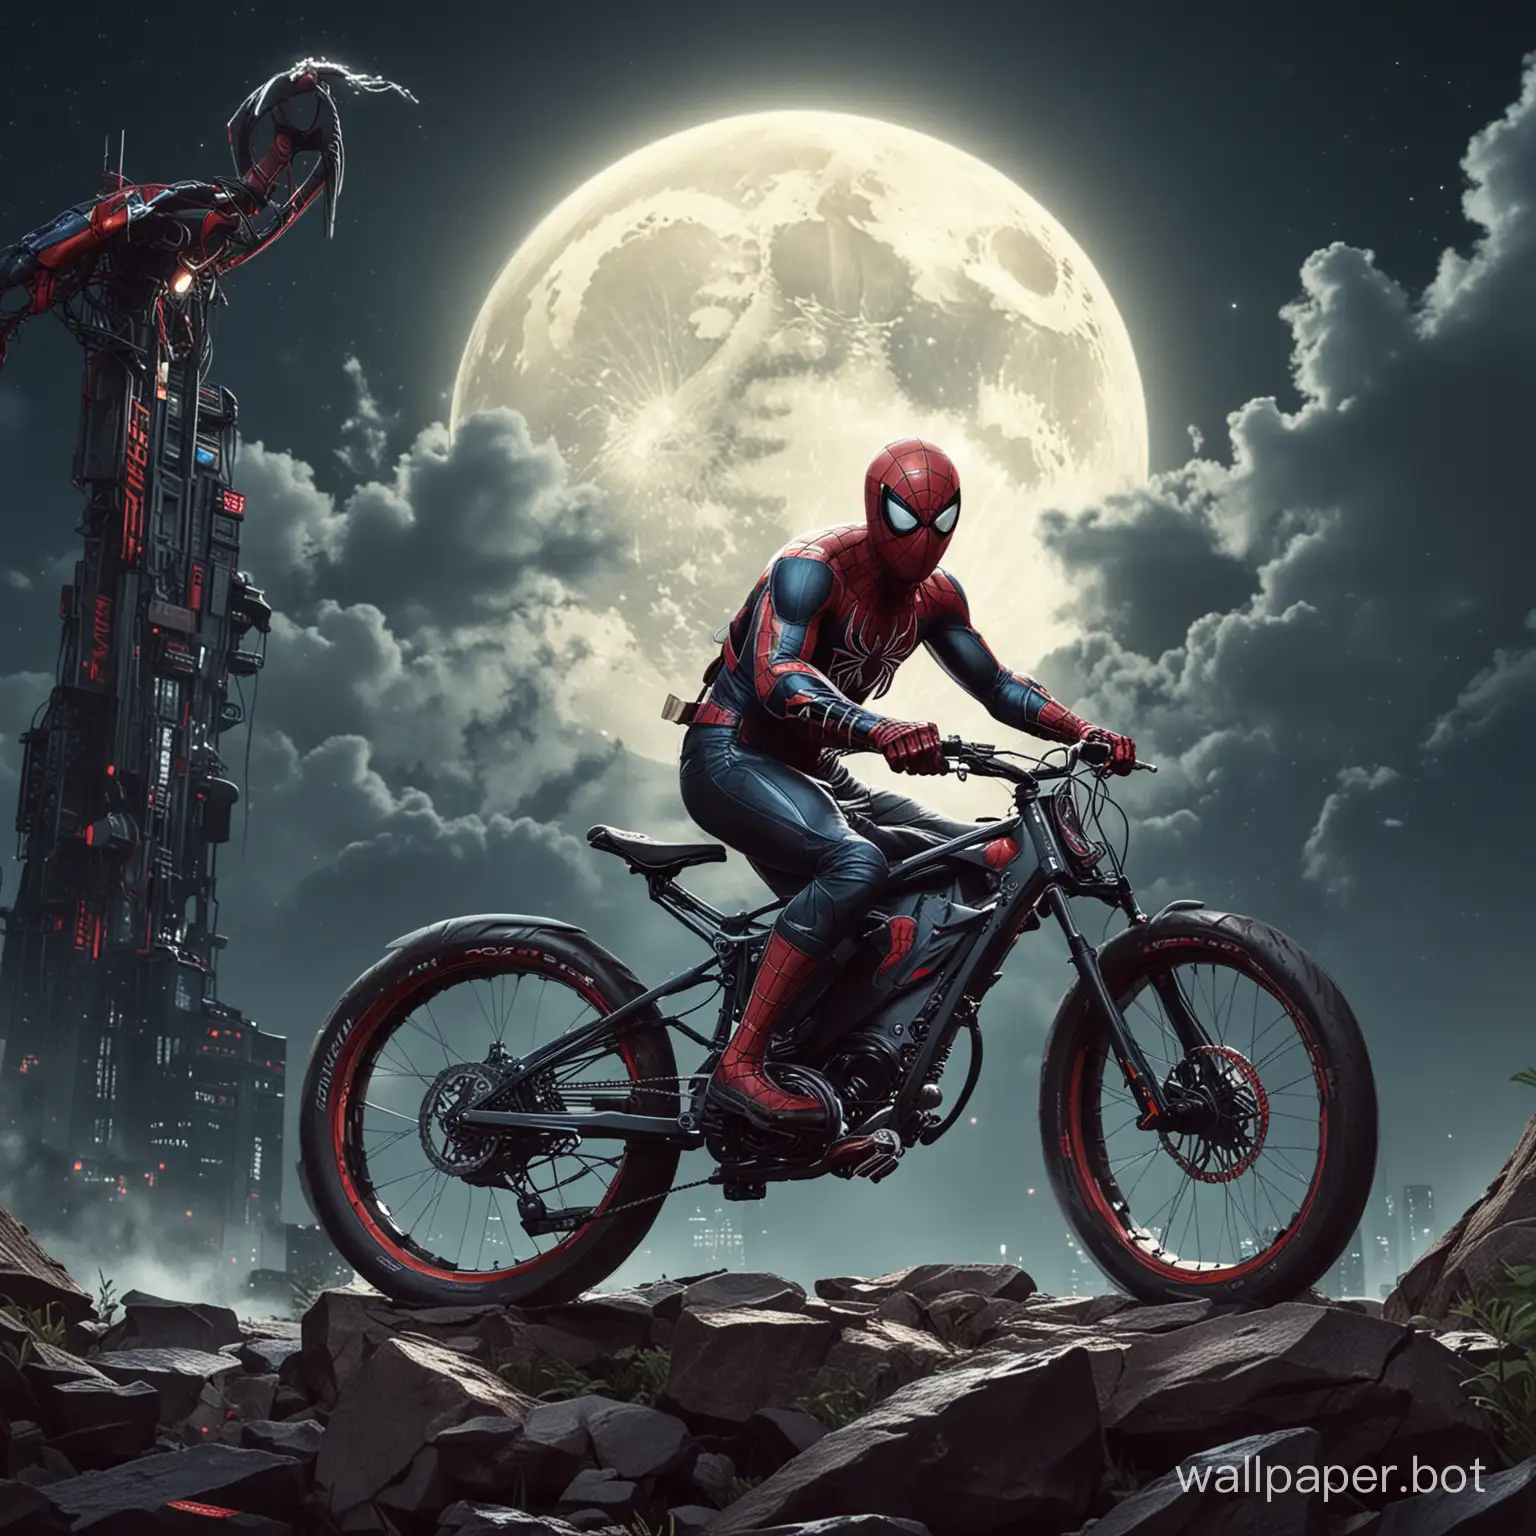 Futuristic-PC-Wallpaper-Moonlit-Spiderman-on-EBike-with-Frenk-Boroni-Style